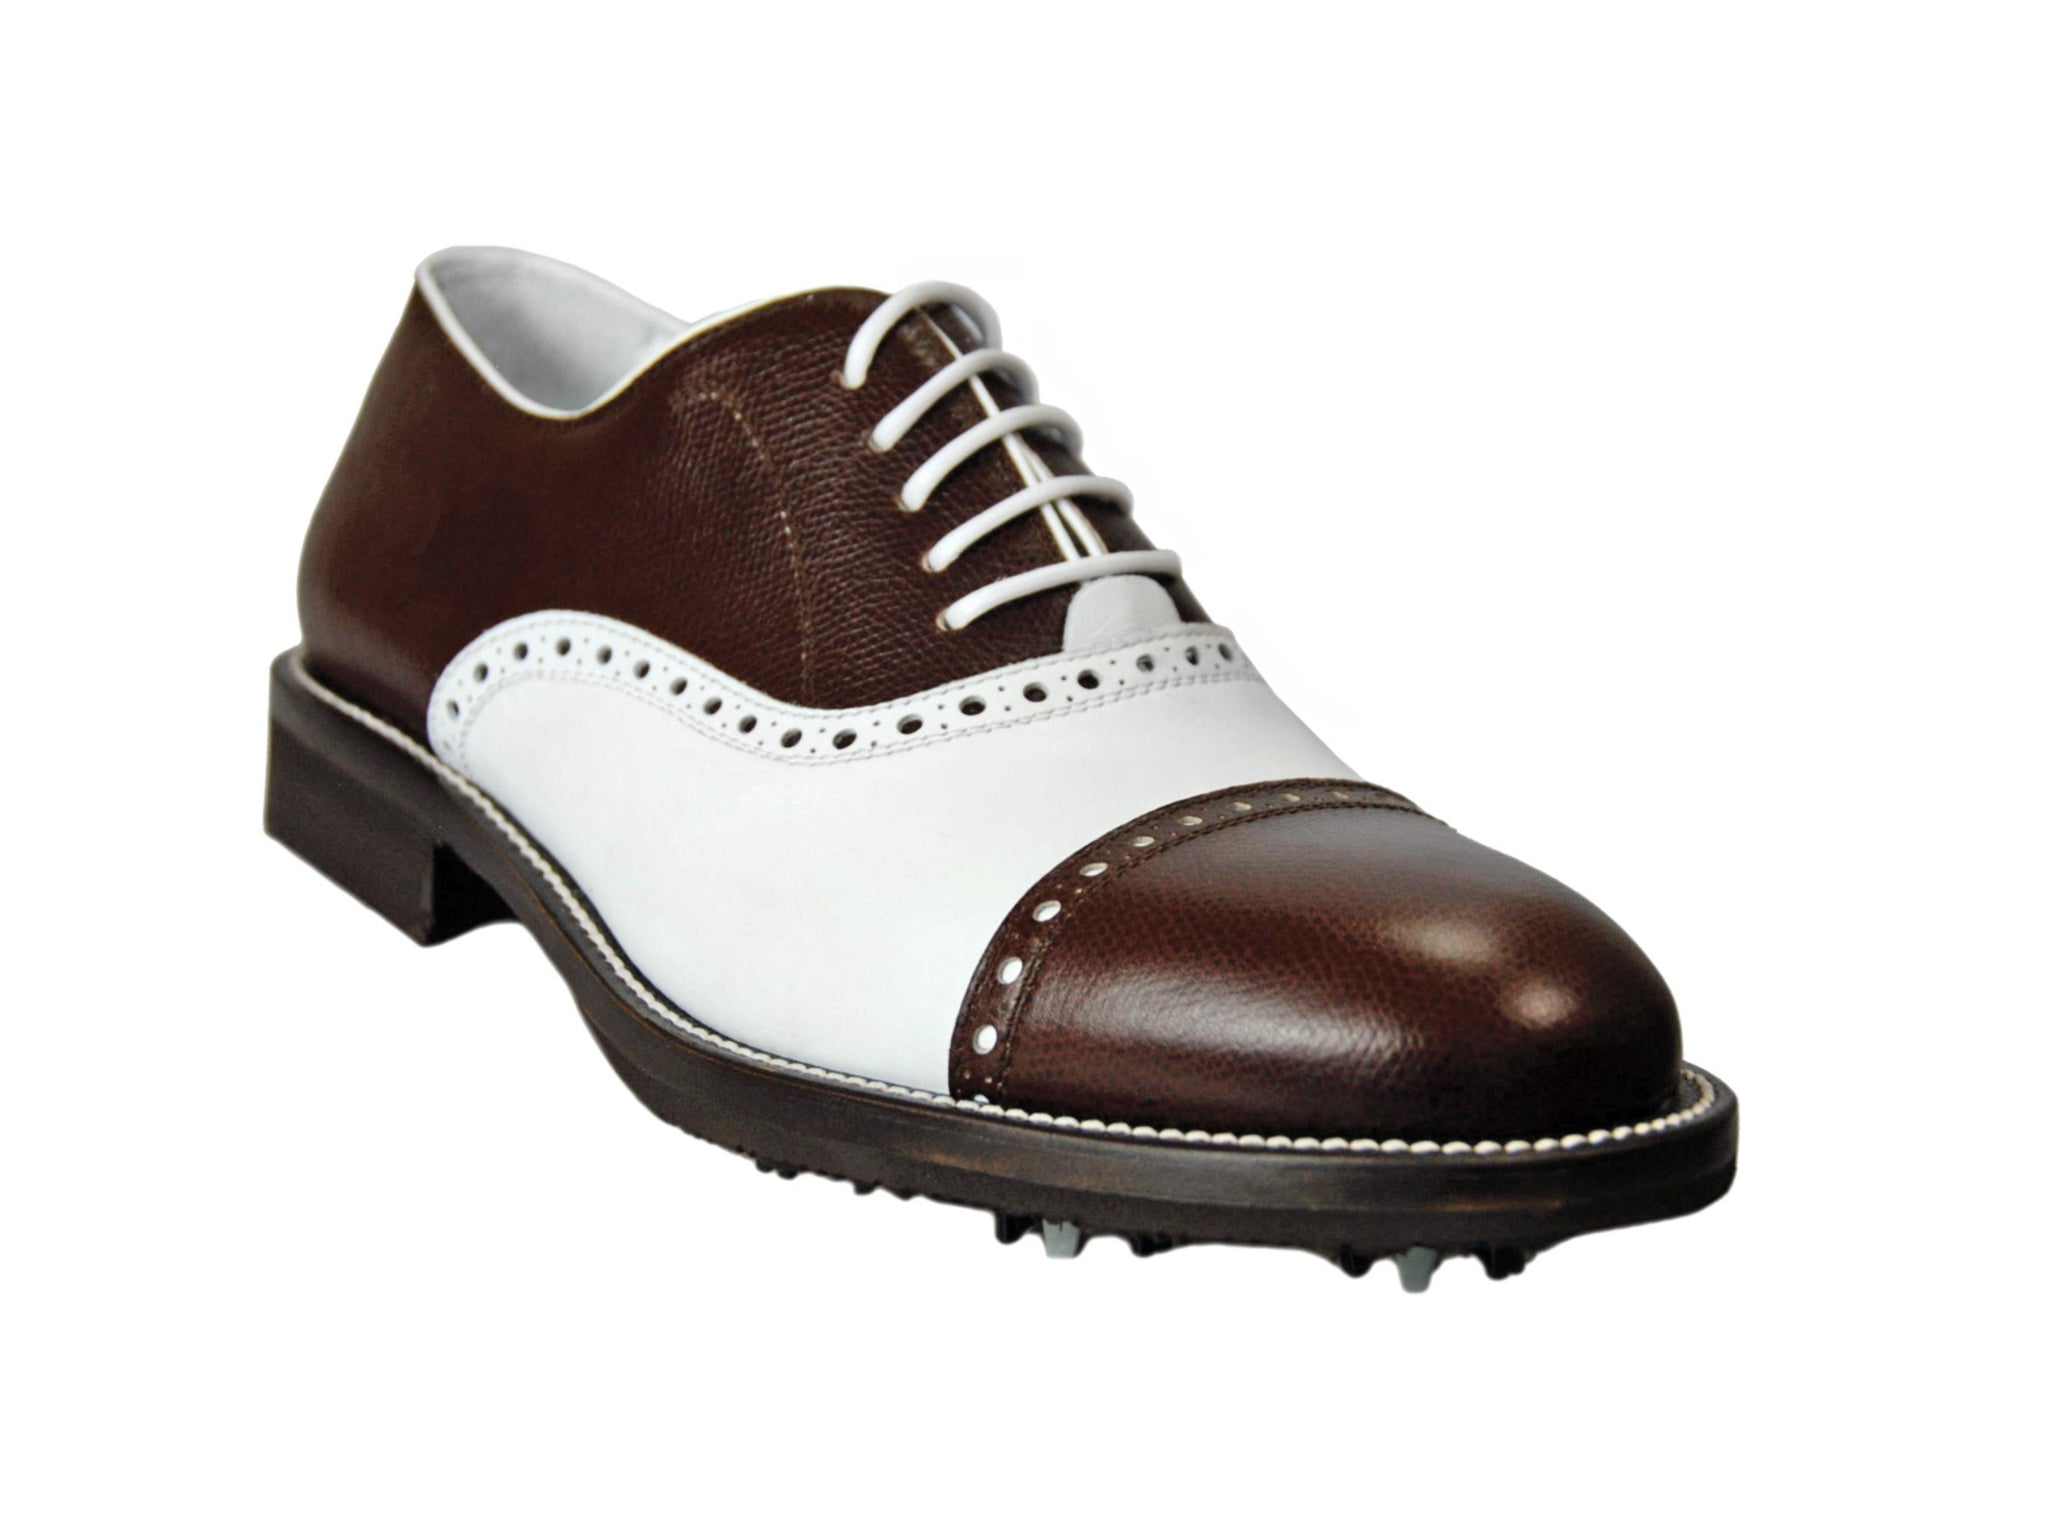 Spiked Golf Shoes - Fresco Golf